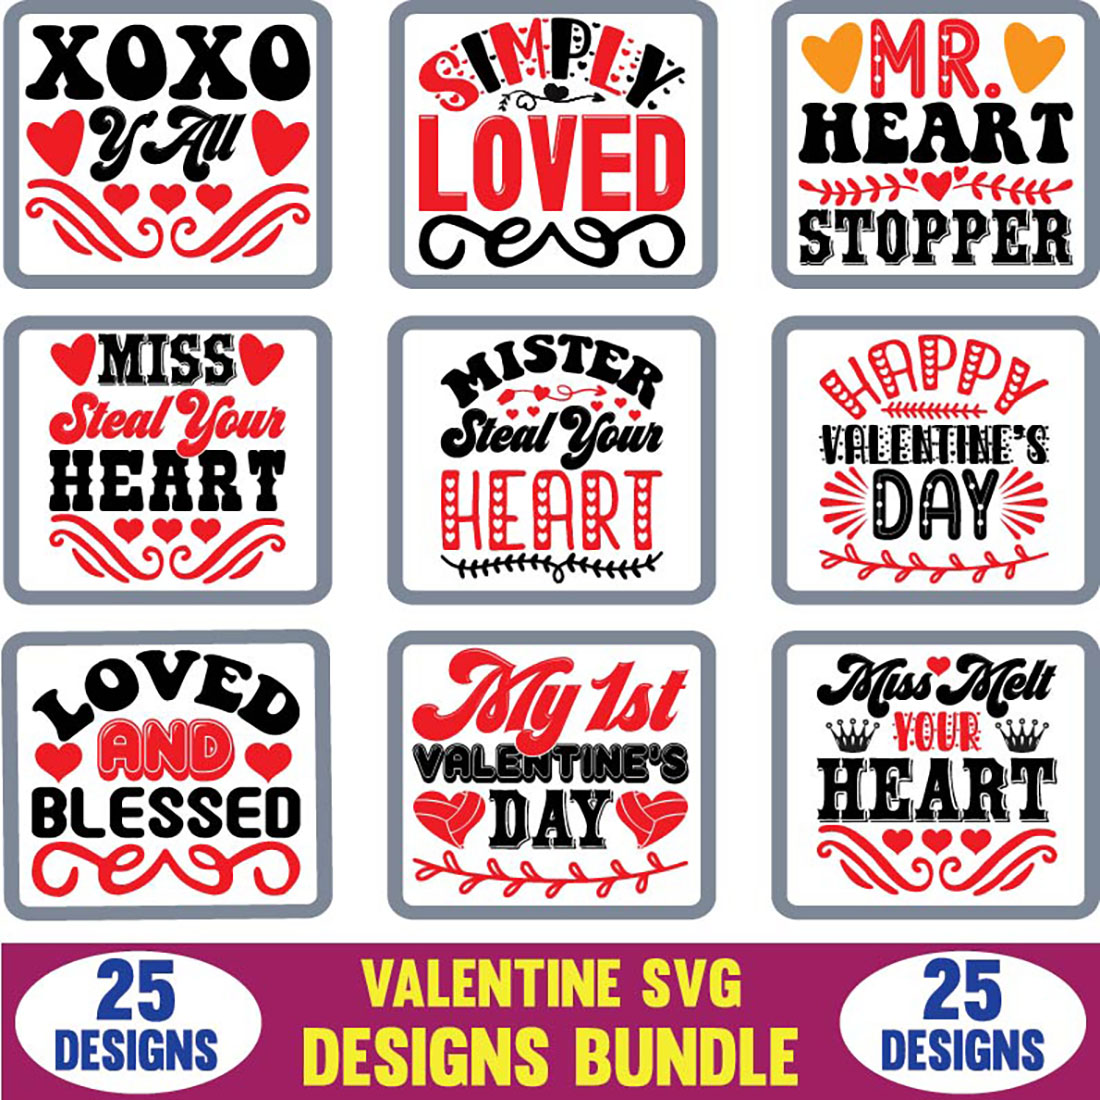 Valentine T-shirt SVG Designs Bundle main cover.